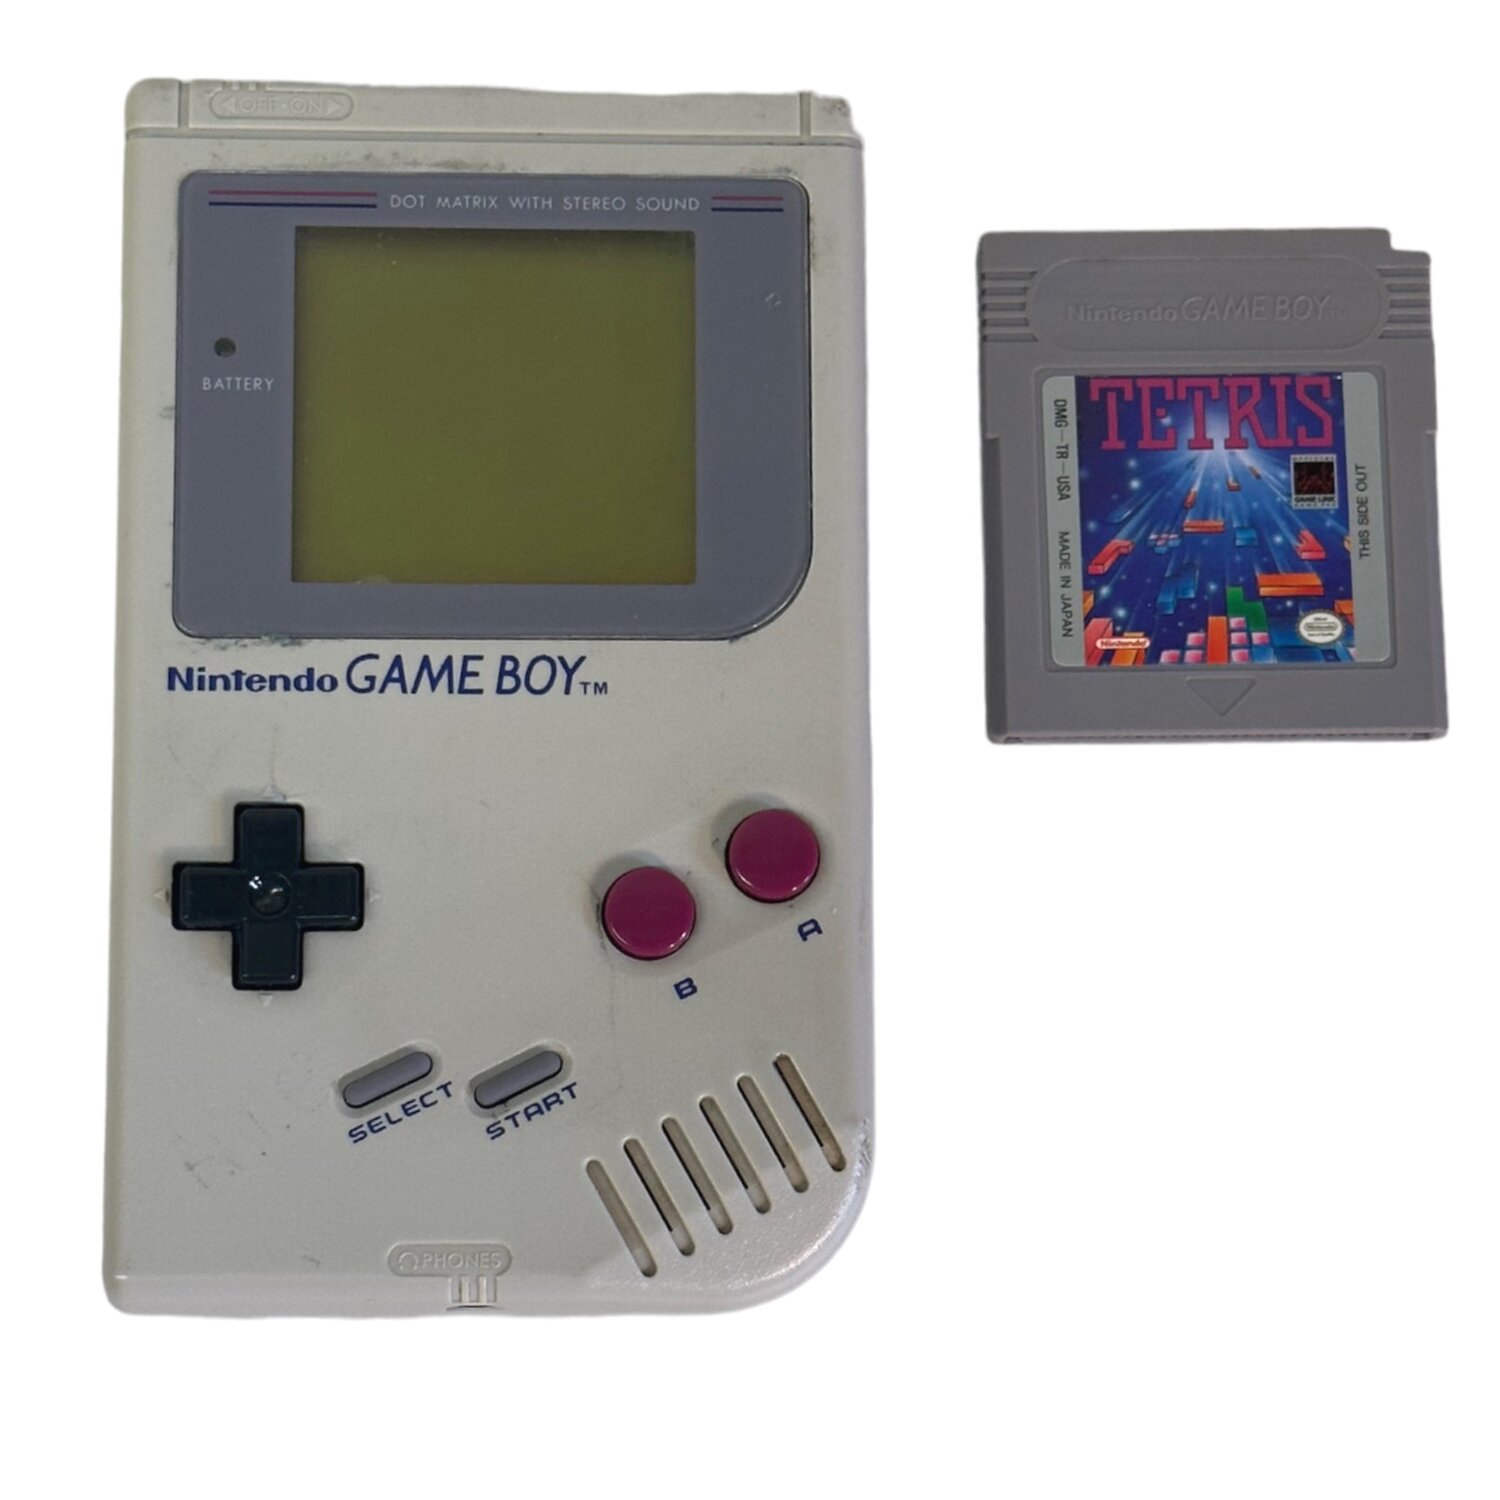 Dejar abajo Permiso franja Original Nintendo Game Boy with Tetris — Mercer Island Thrift Shop